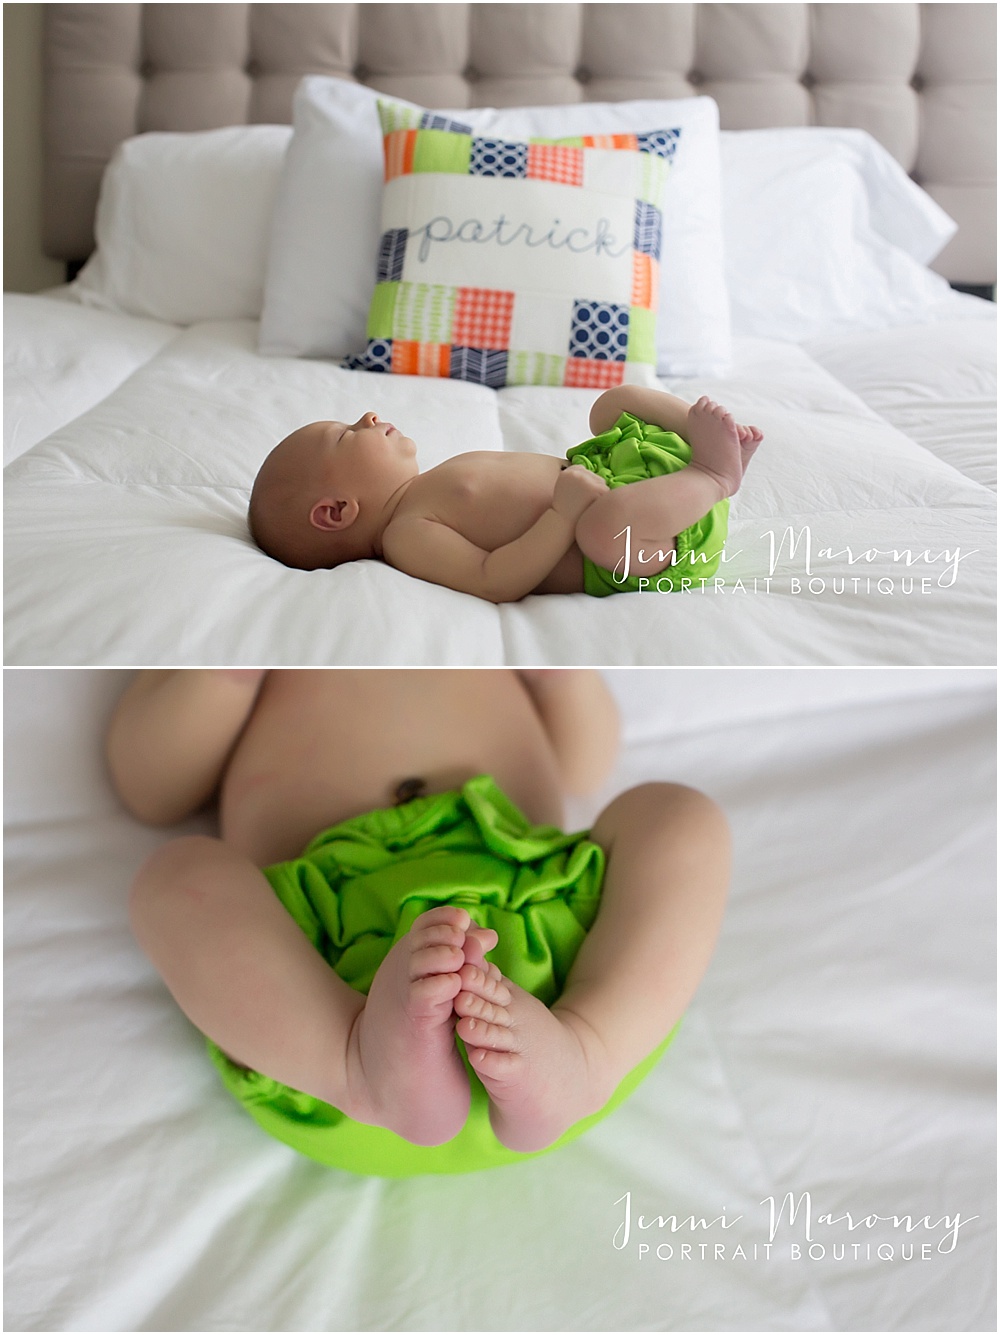 In-studio newborn photography session with baby boy, captured by Denver newborn photographer Jenni Maroney.